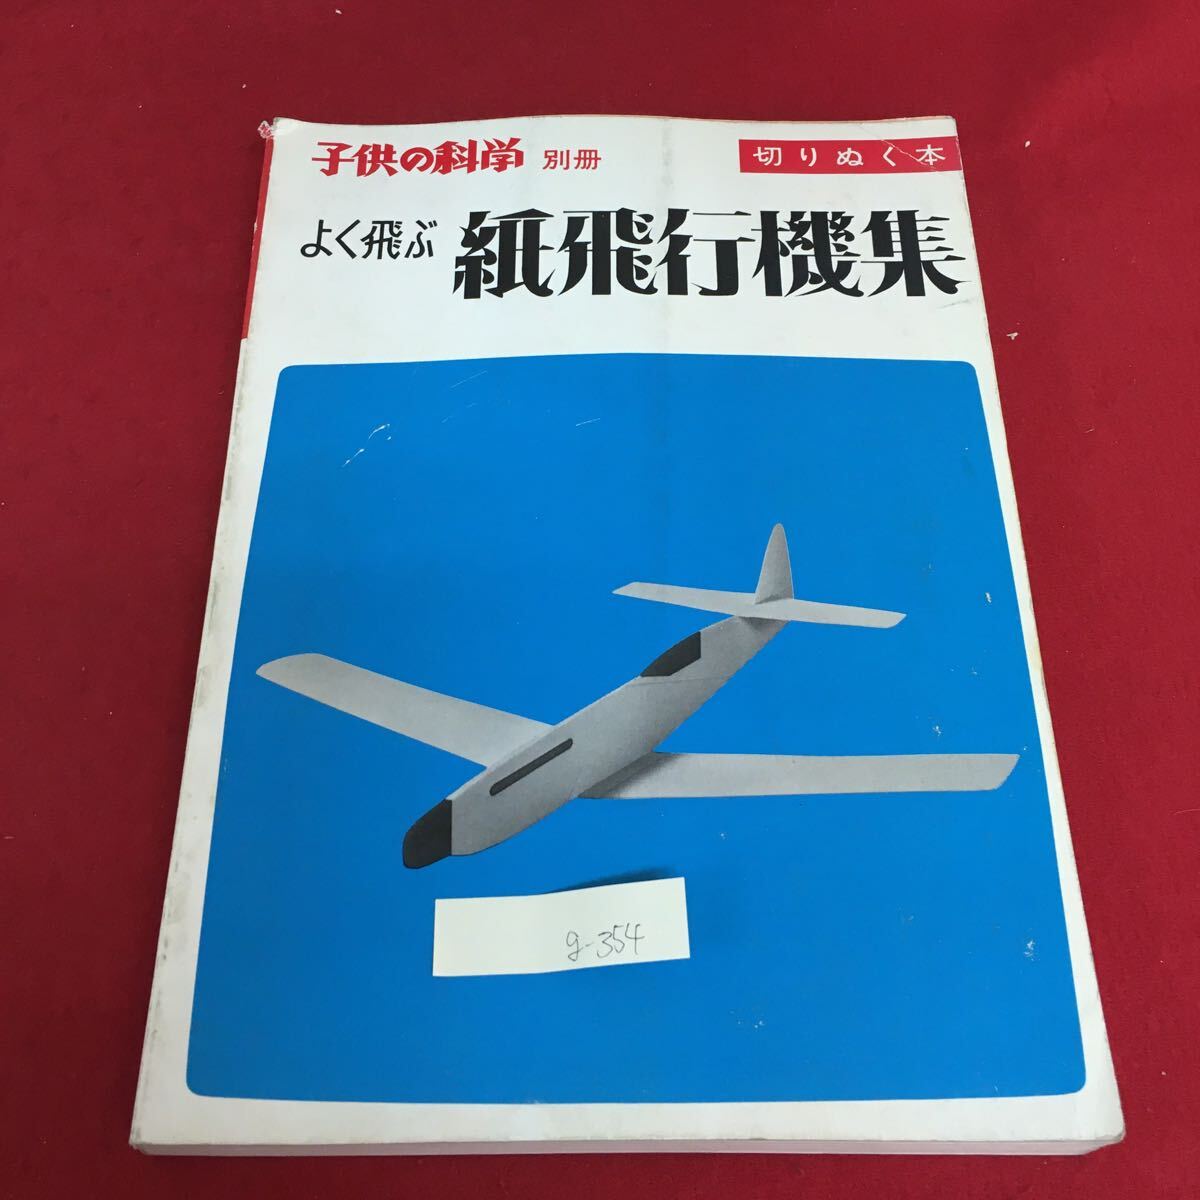 g-354 子供の科学別冊 よく飛ぶ紙飛行機集 切りぬく本 昭和47年8月31日 第1版発行 ユンカース ※3 _画像1